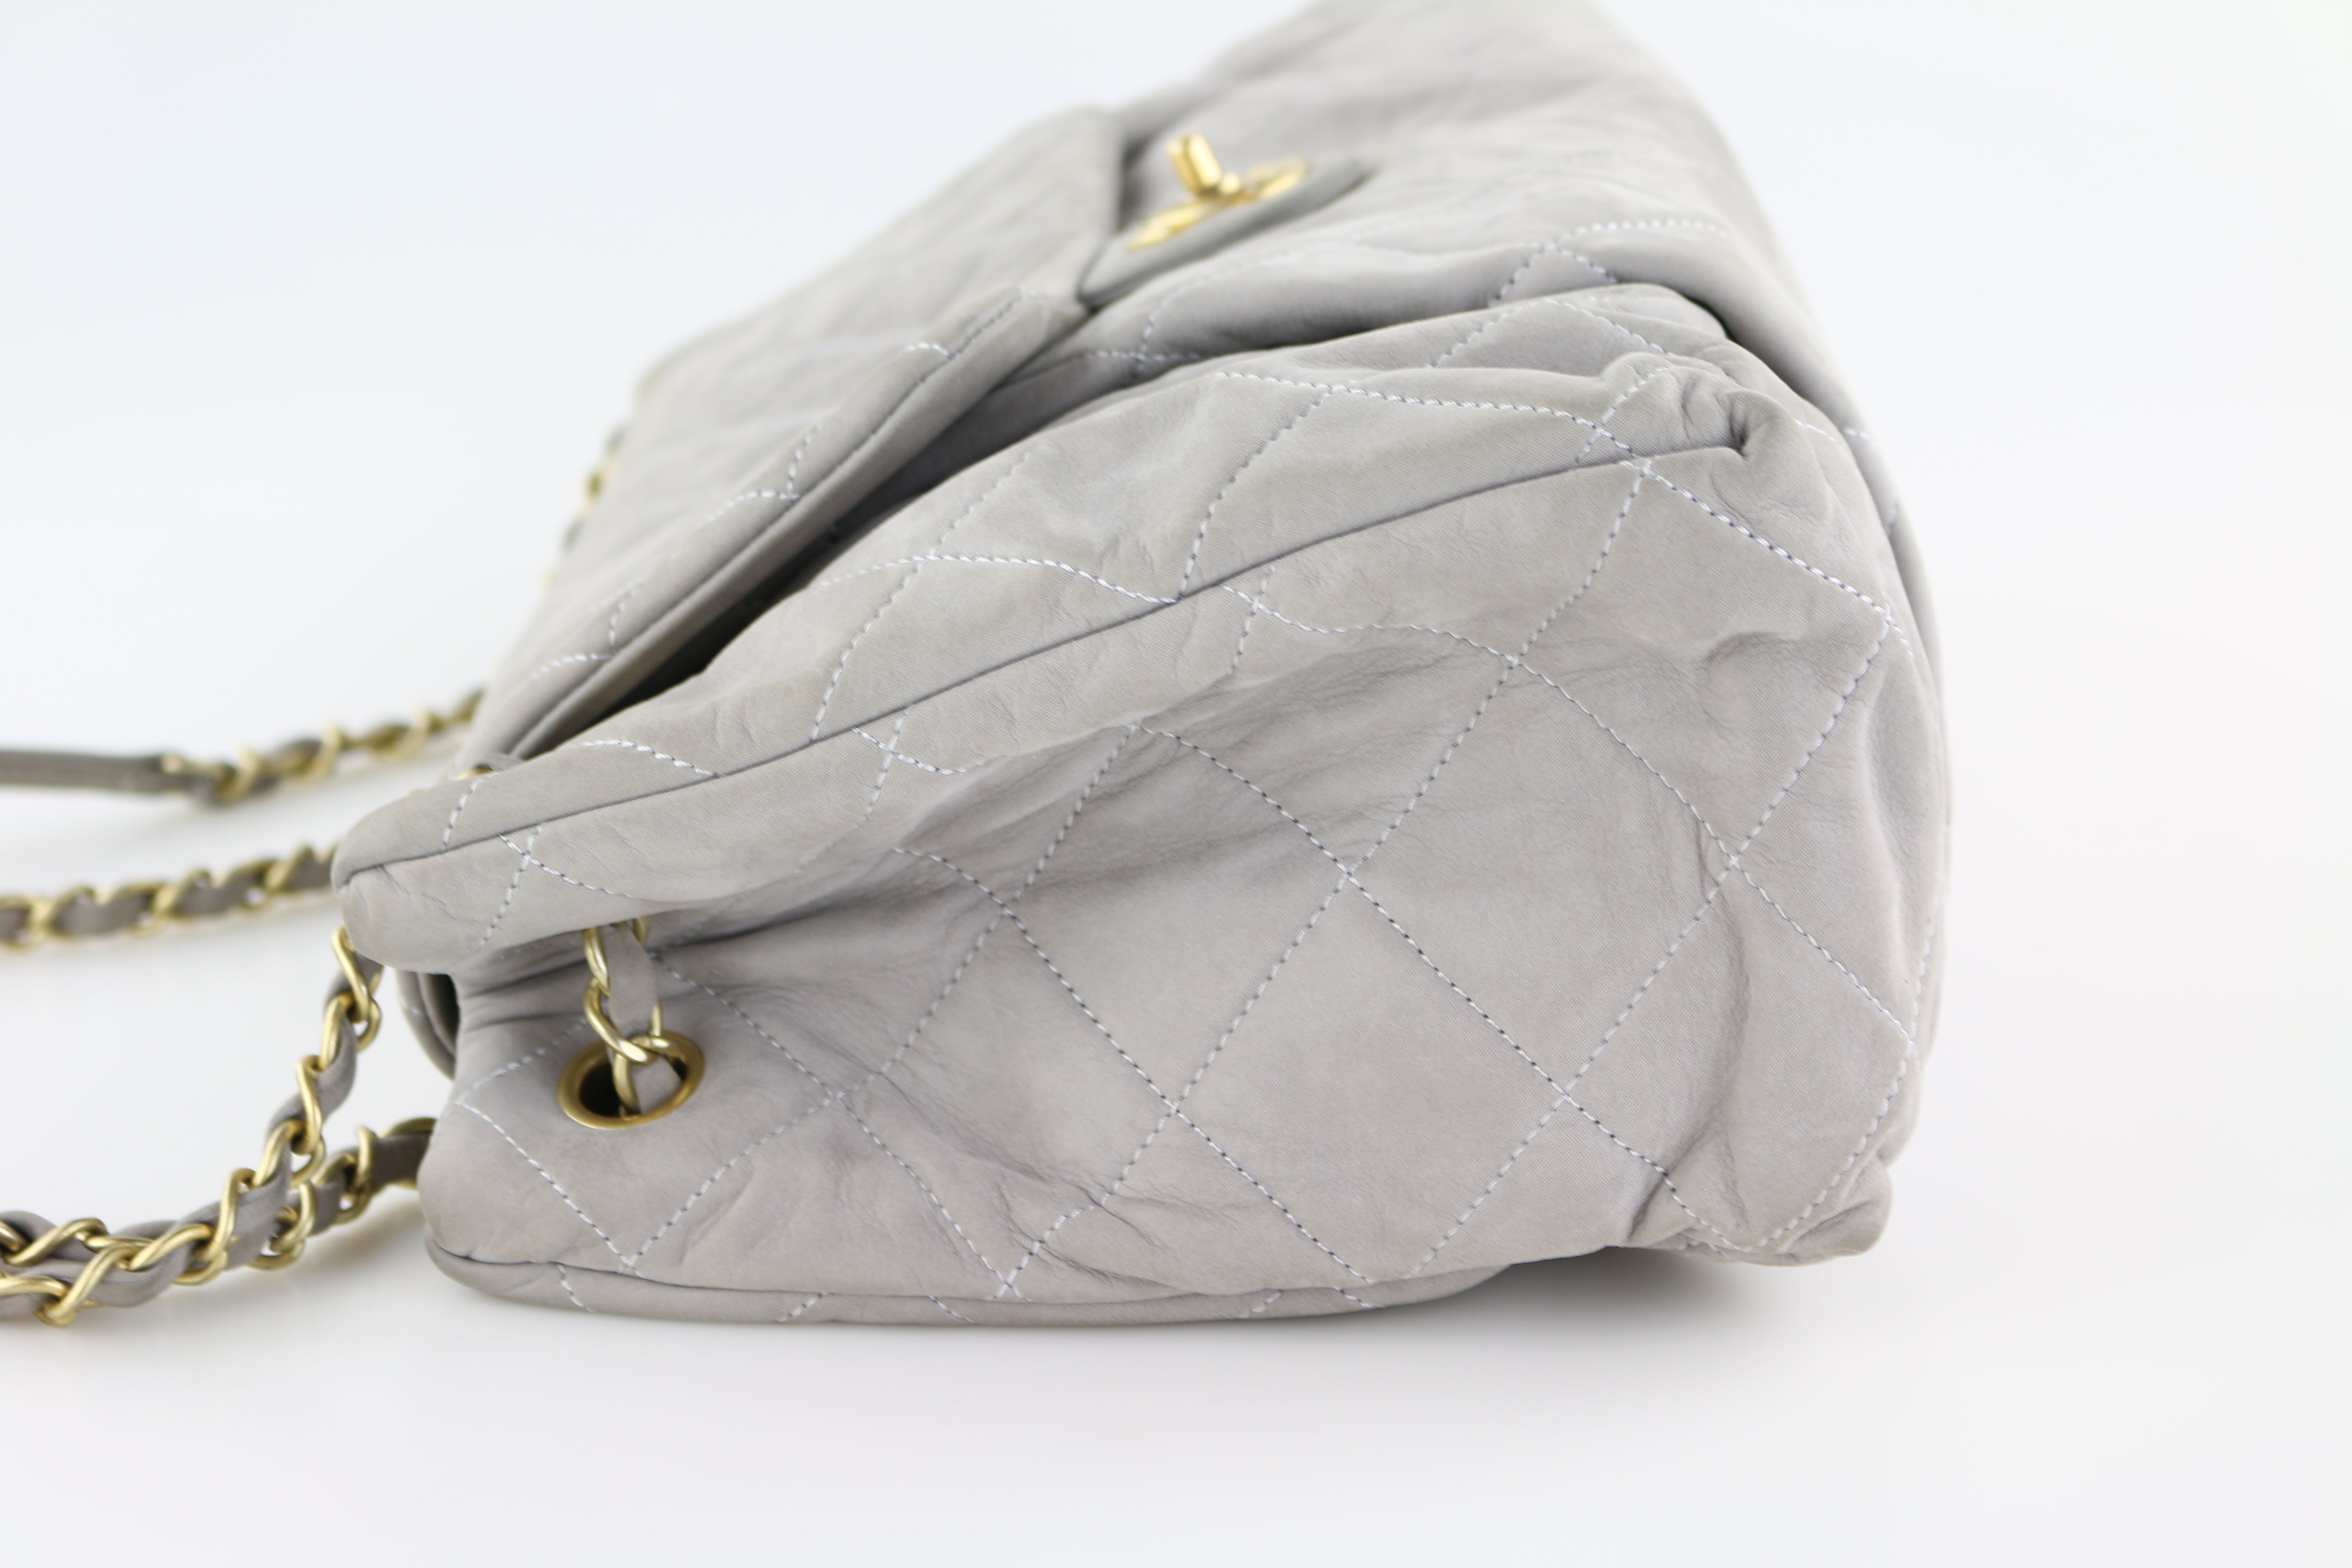 Chanel Black Leather Accordion Zipper Bag Chanel | The Luxury Closet